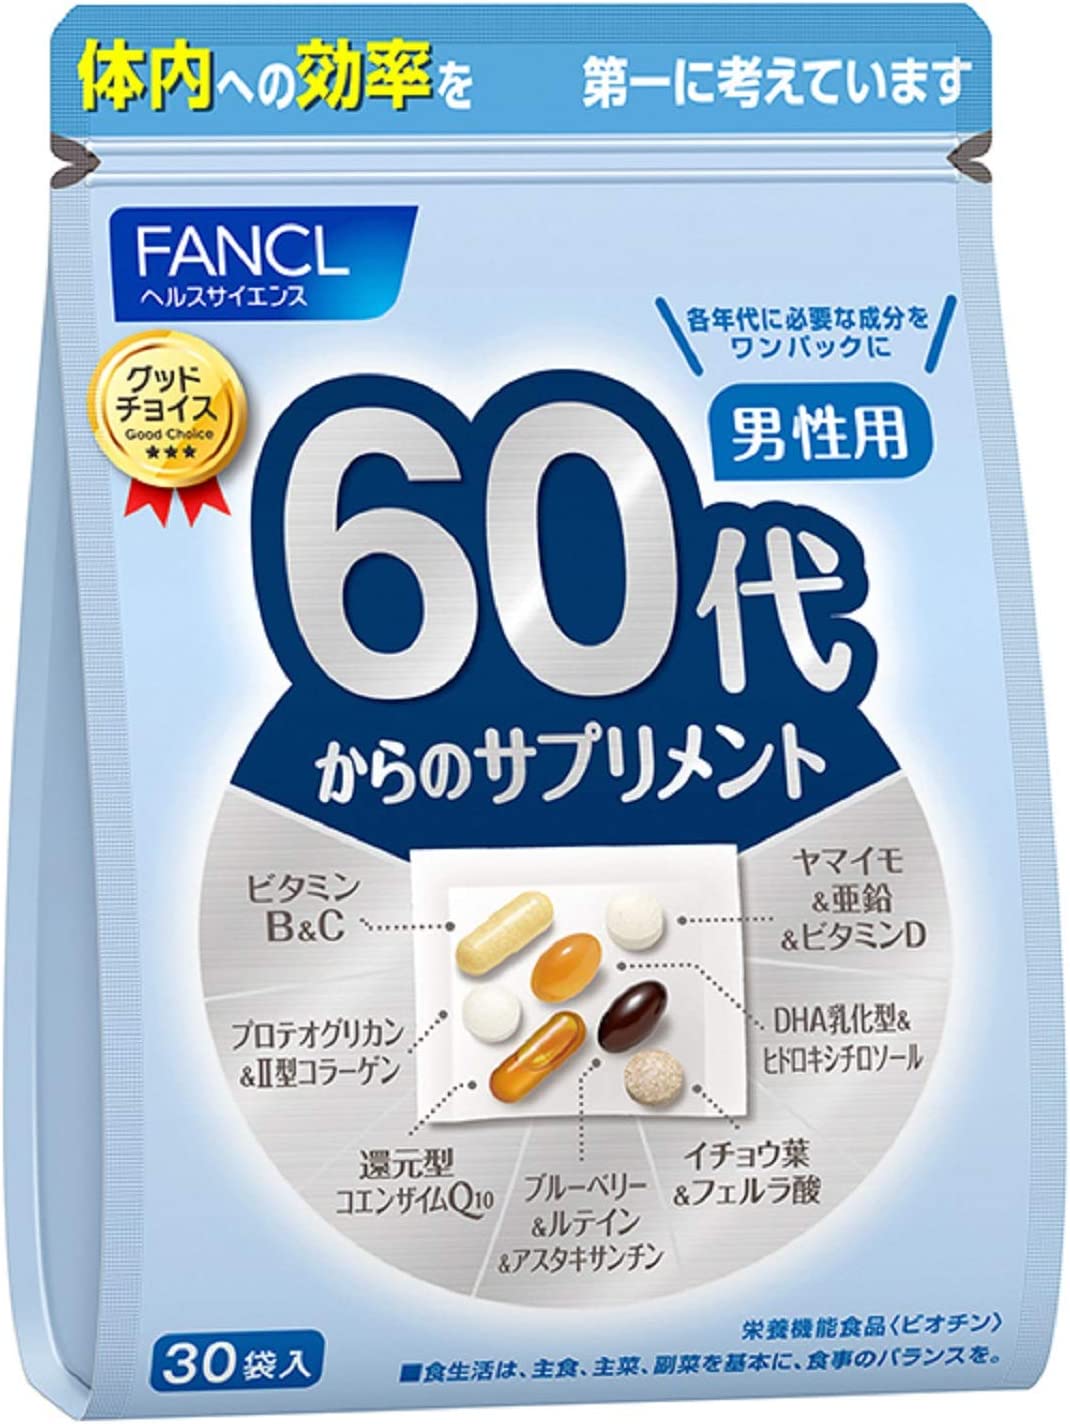 цена Комплекс витамин FANCL для мужчин старше 60 лет